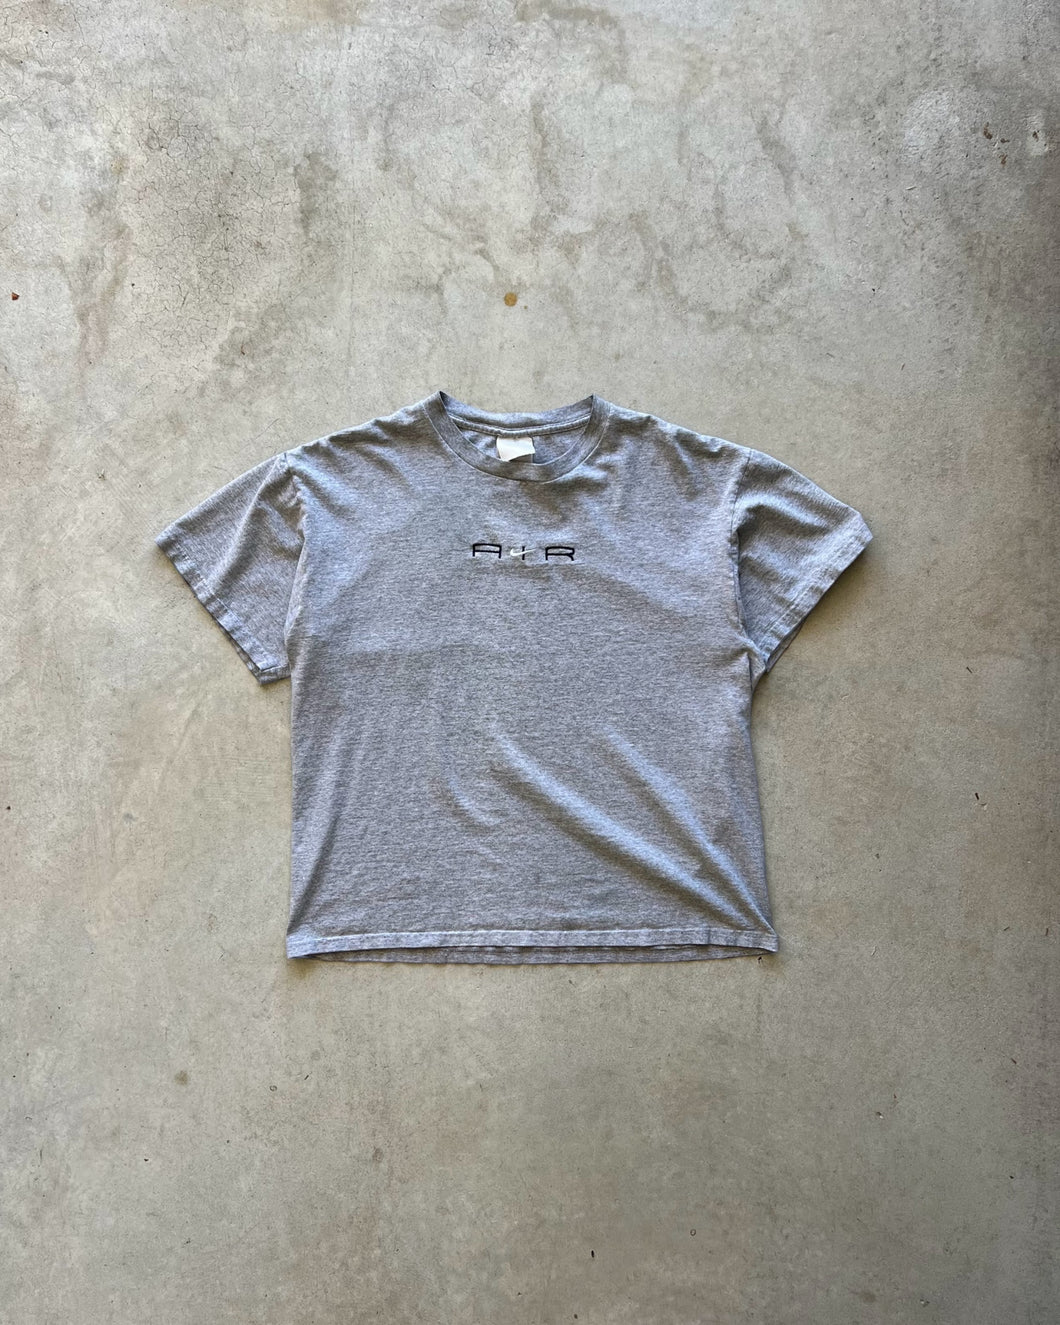 Vintage Nike Air Spellout T shirt - L